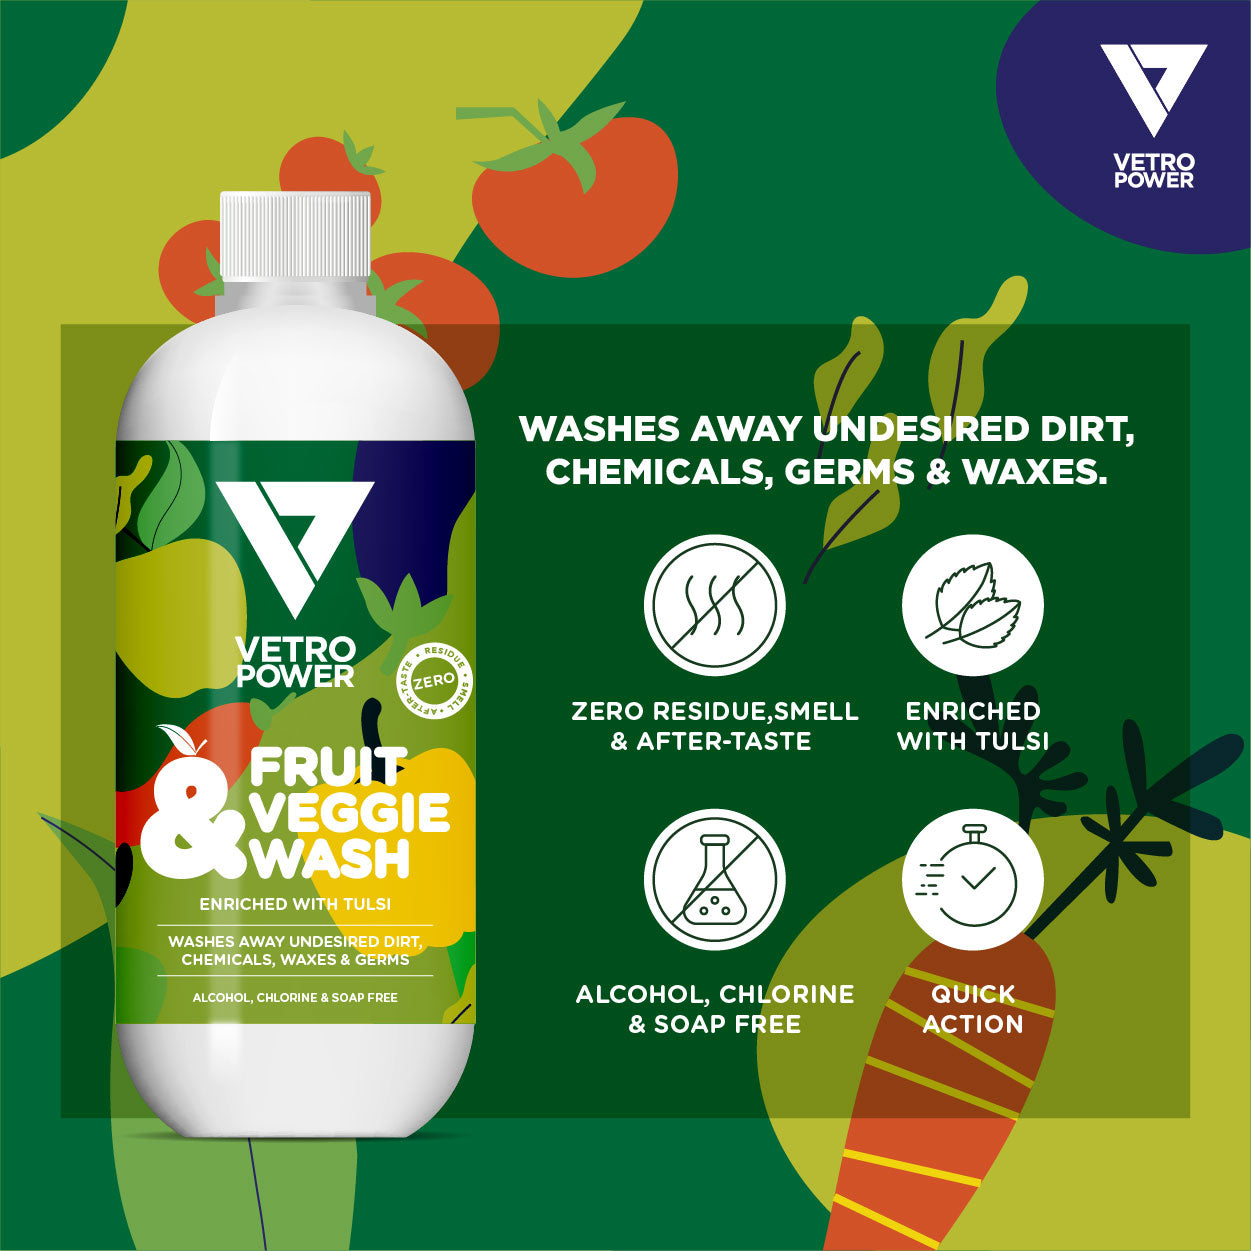 Vetro Power Fruit & Veggie Wash